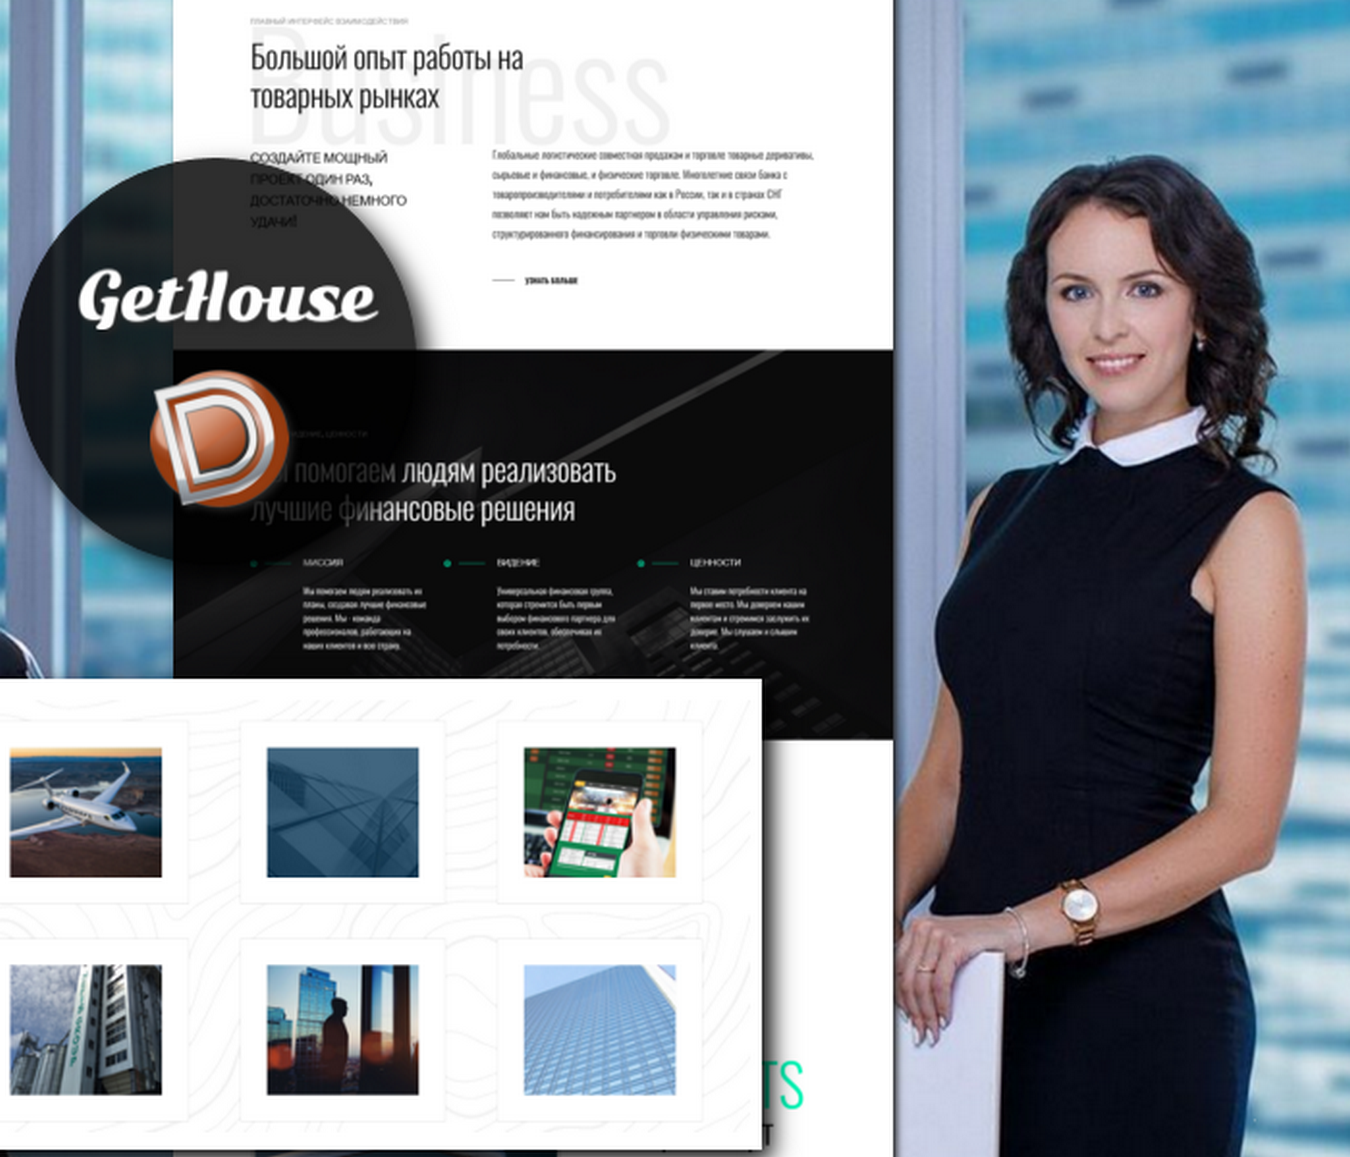 Gethouse — сайт бизнес компании Dle 15.1